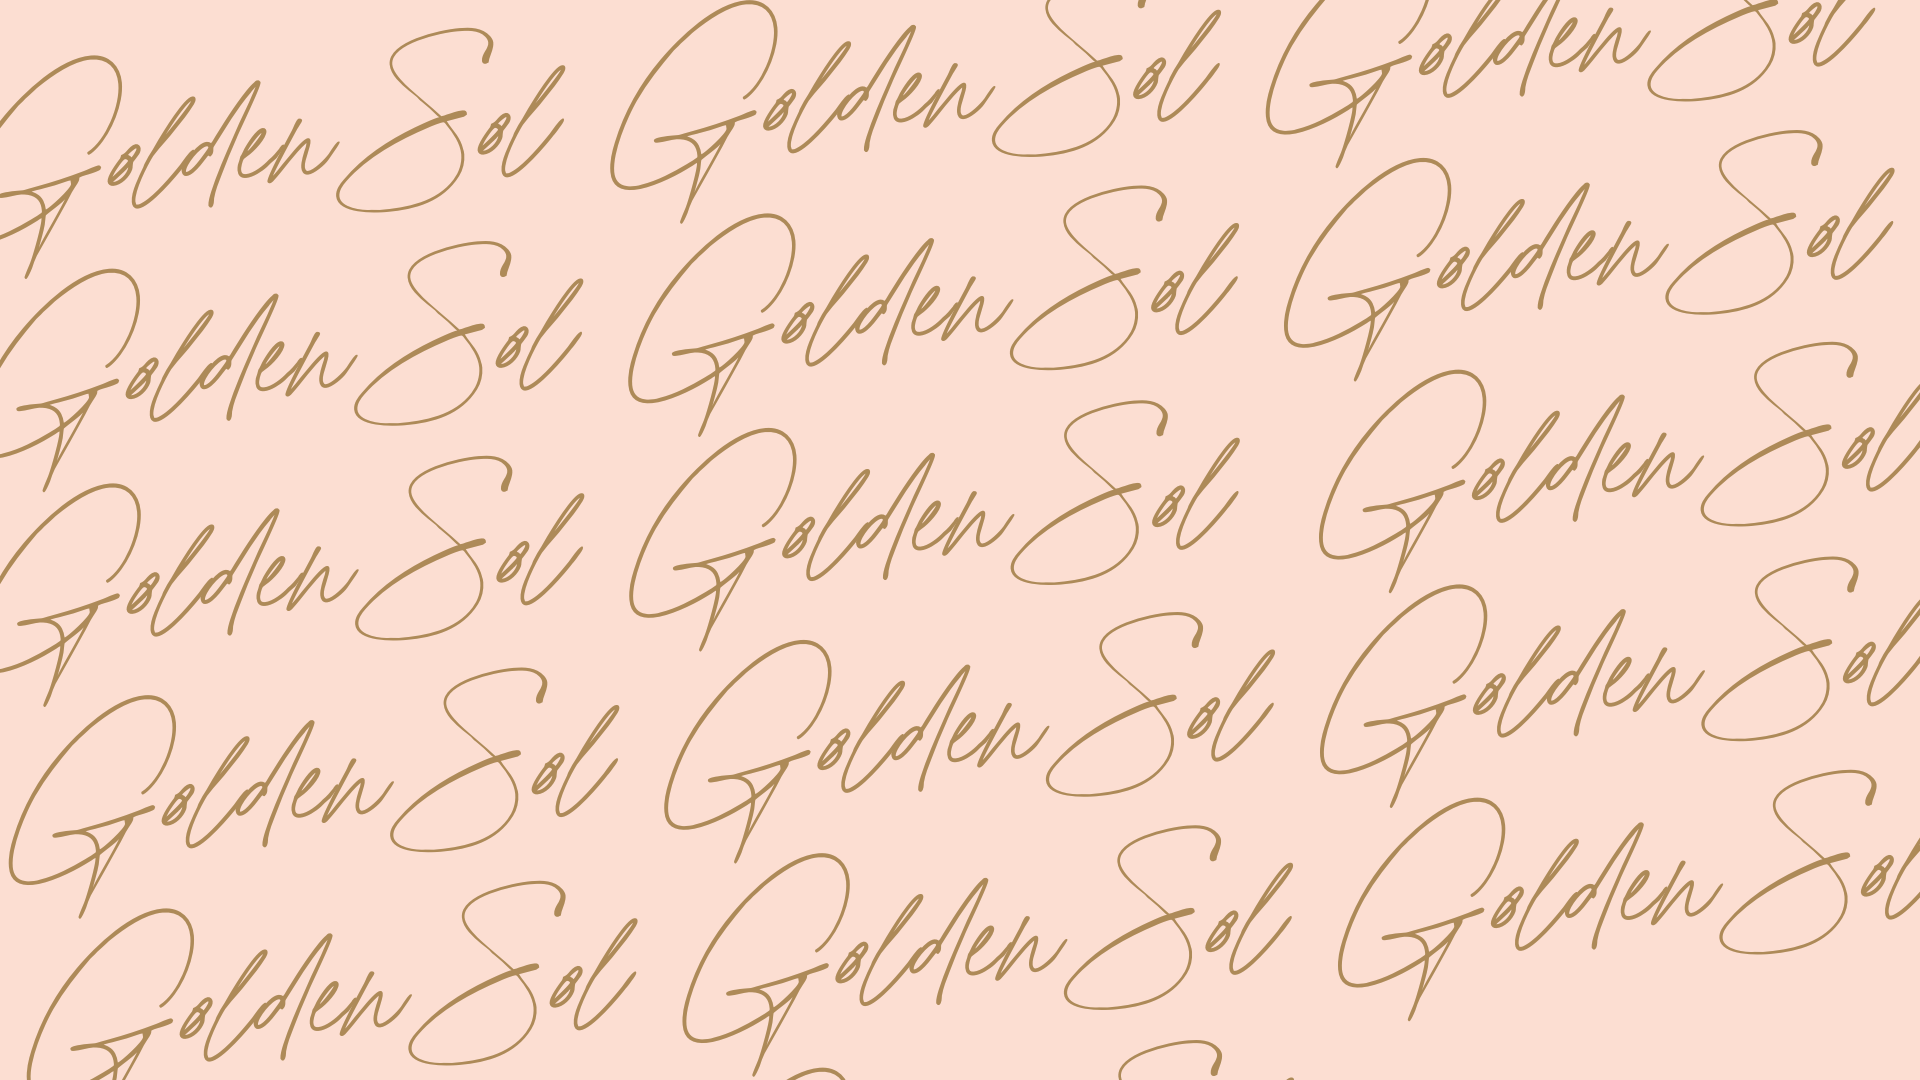 Golden Sol Brand Pattern | Sorority merch, Greek life, Sorority rush, sorority gifts